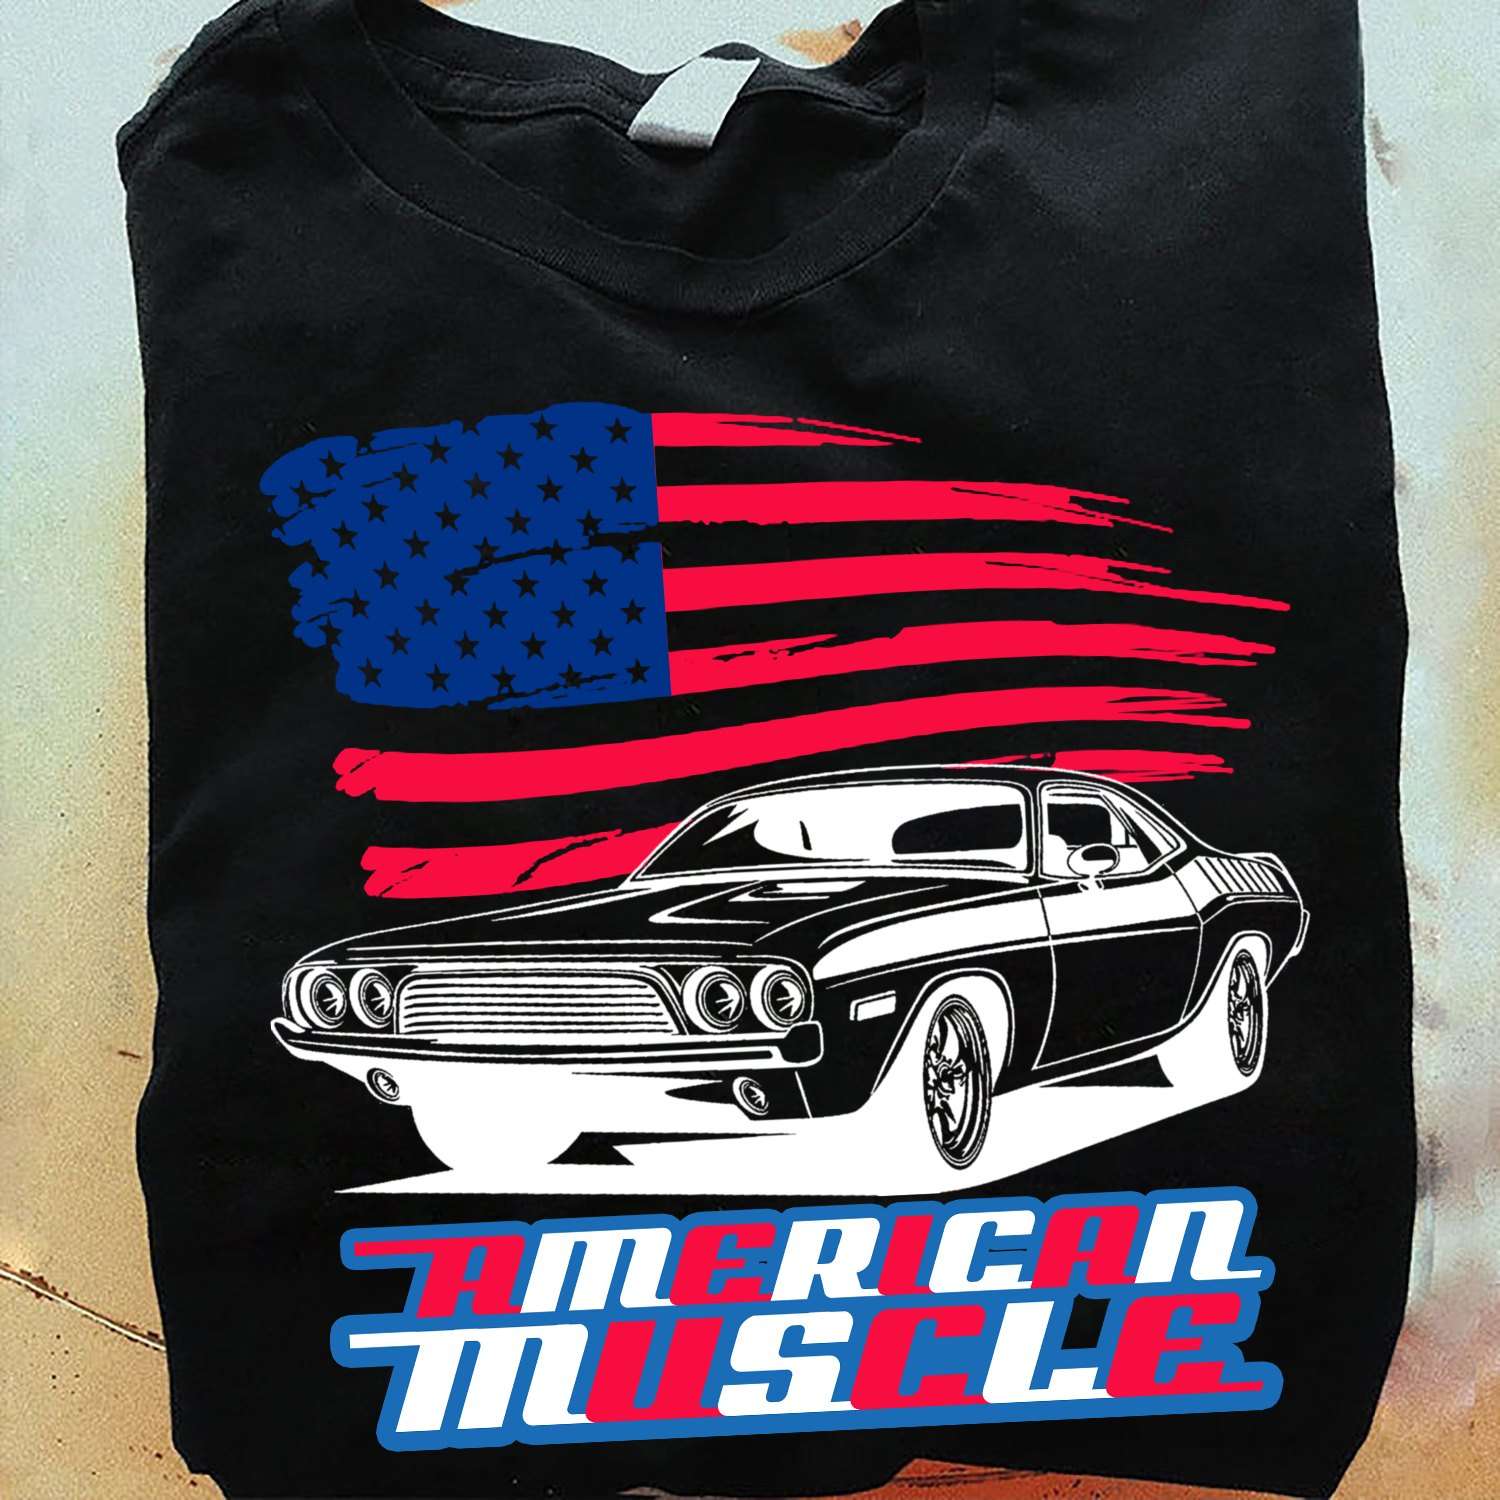 American muscle - Muscle car of America, American muscle car racing